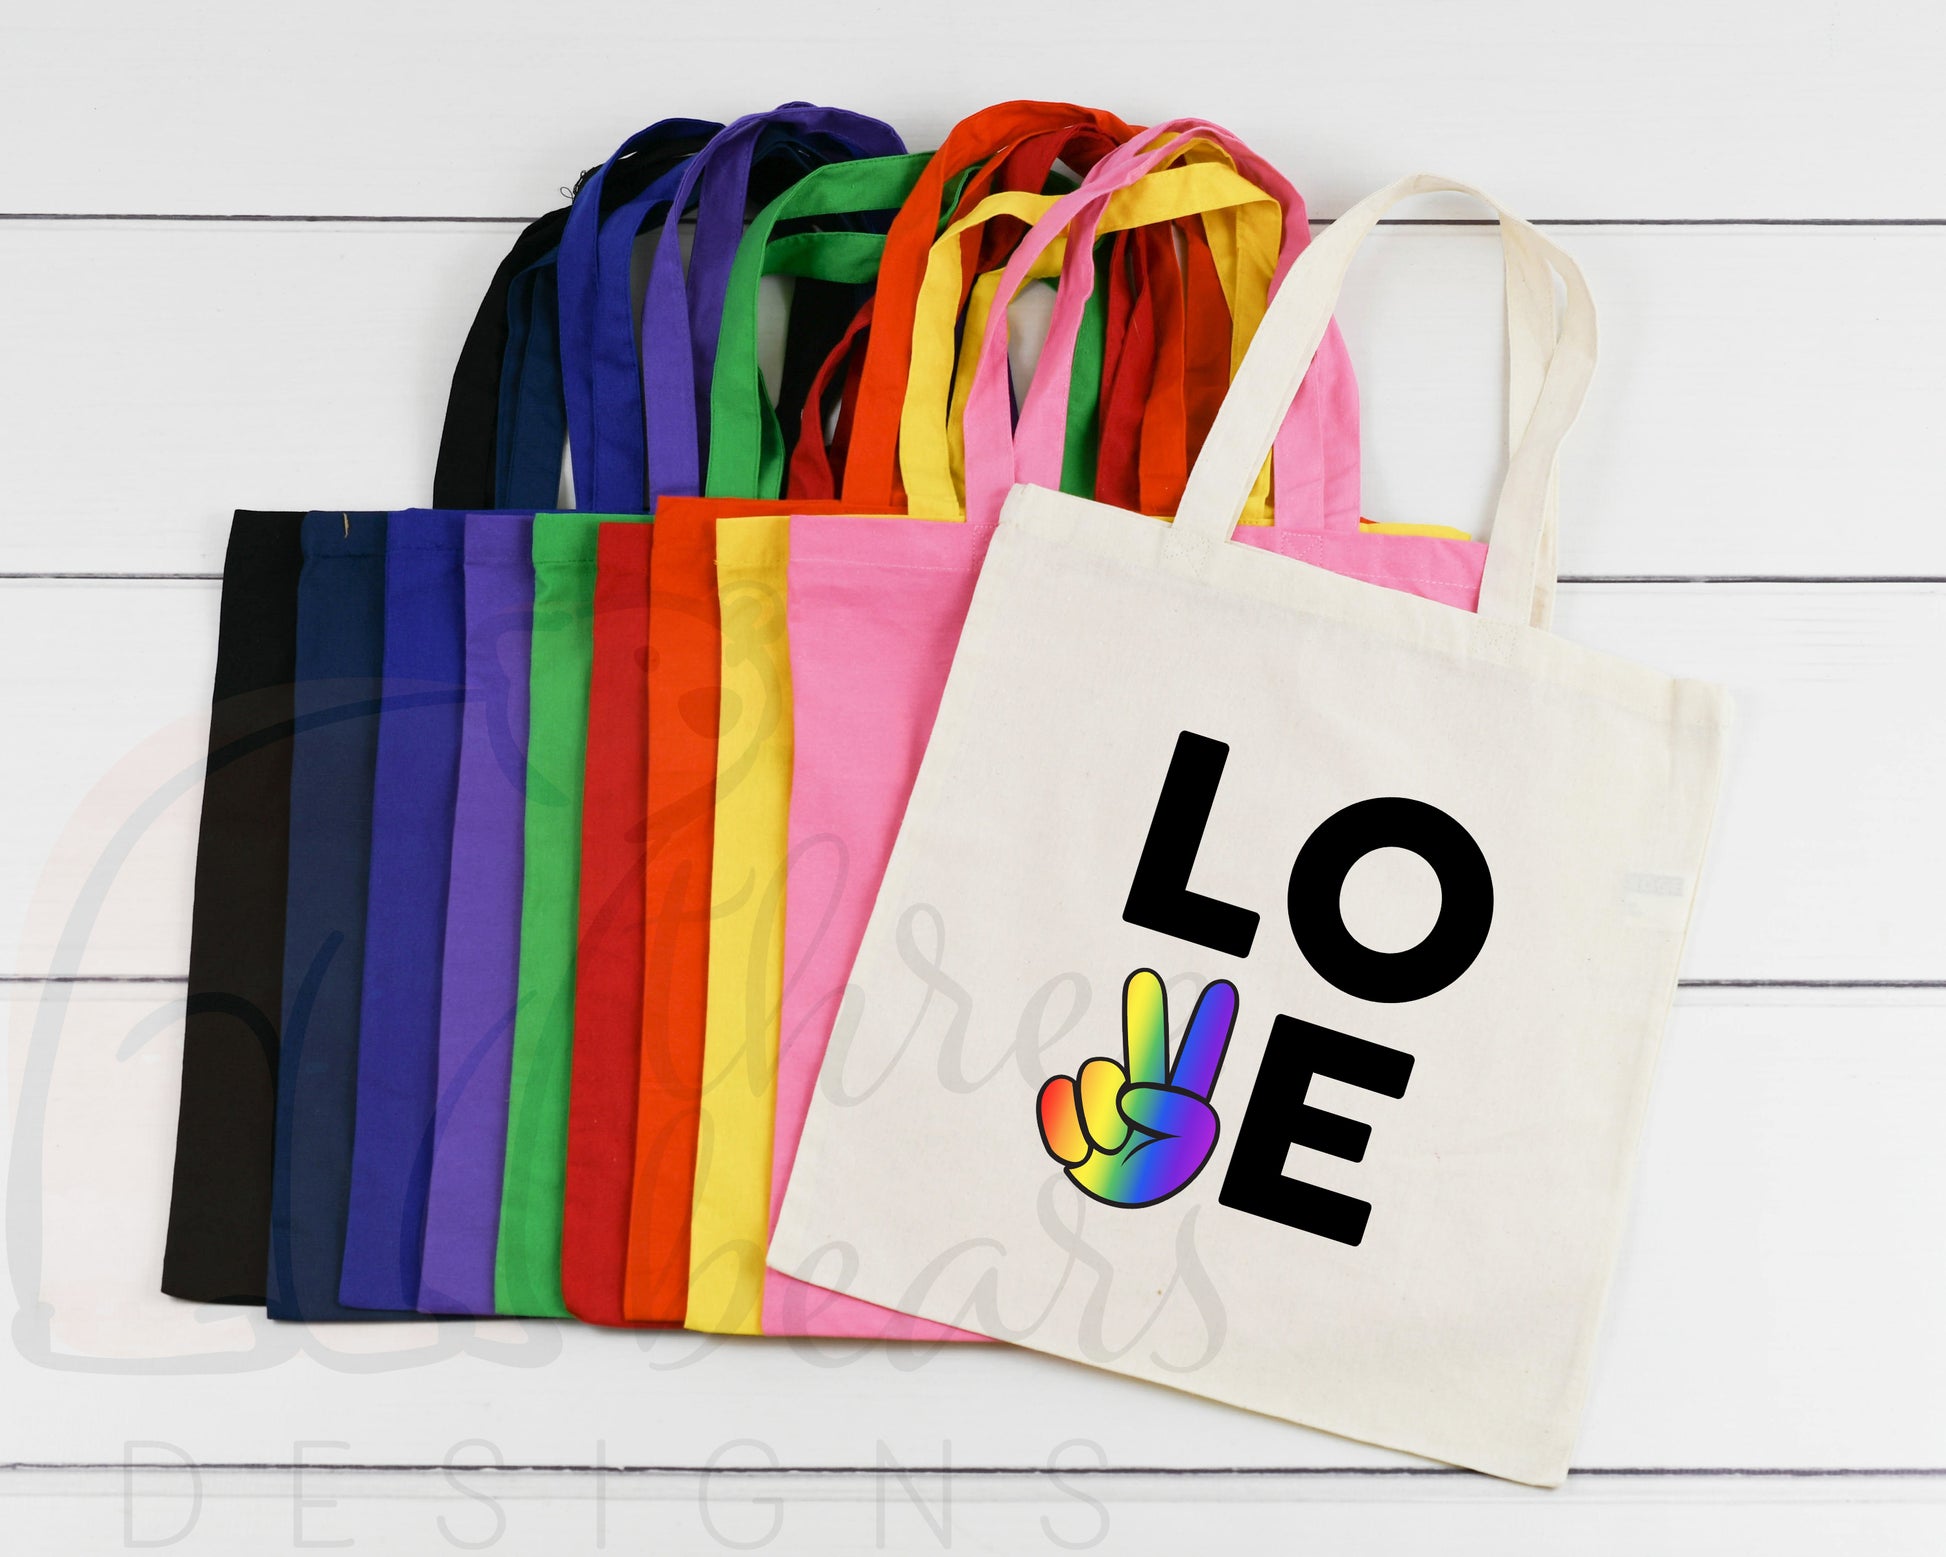 Pride Cloth Bag Love for All Tote Bag Pride LGBT Cloth Bag 